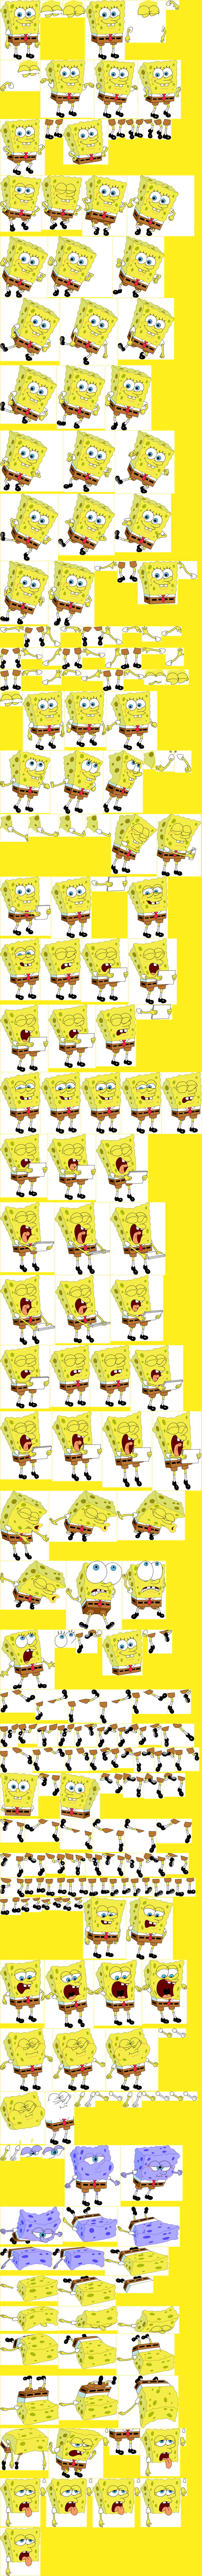 SpongeBob & Clifford Montage - SpongeBob